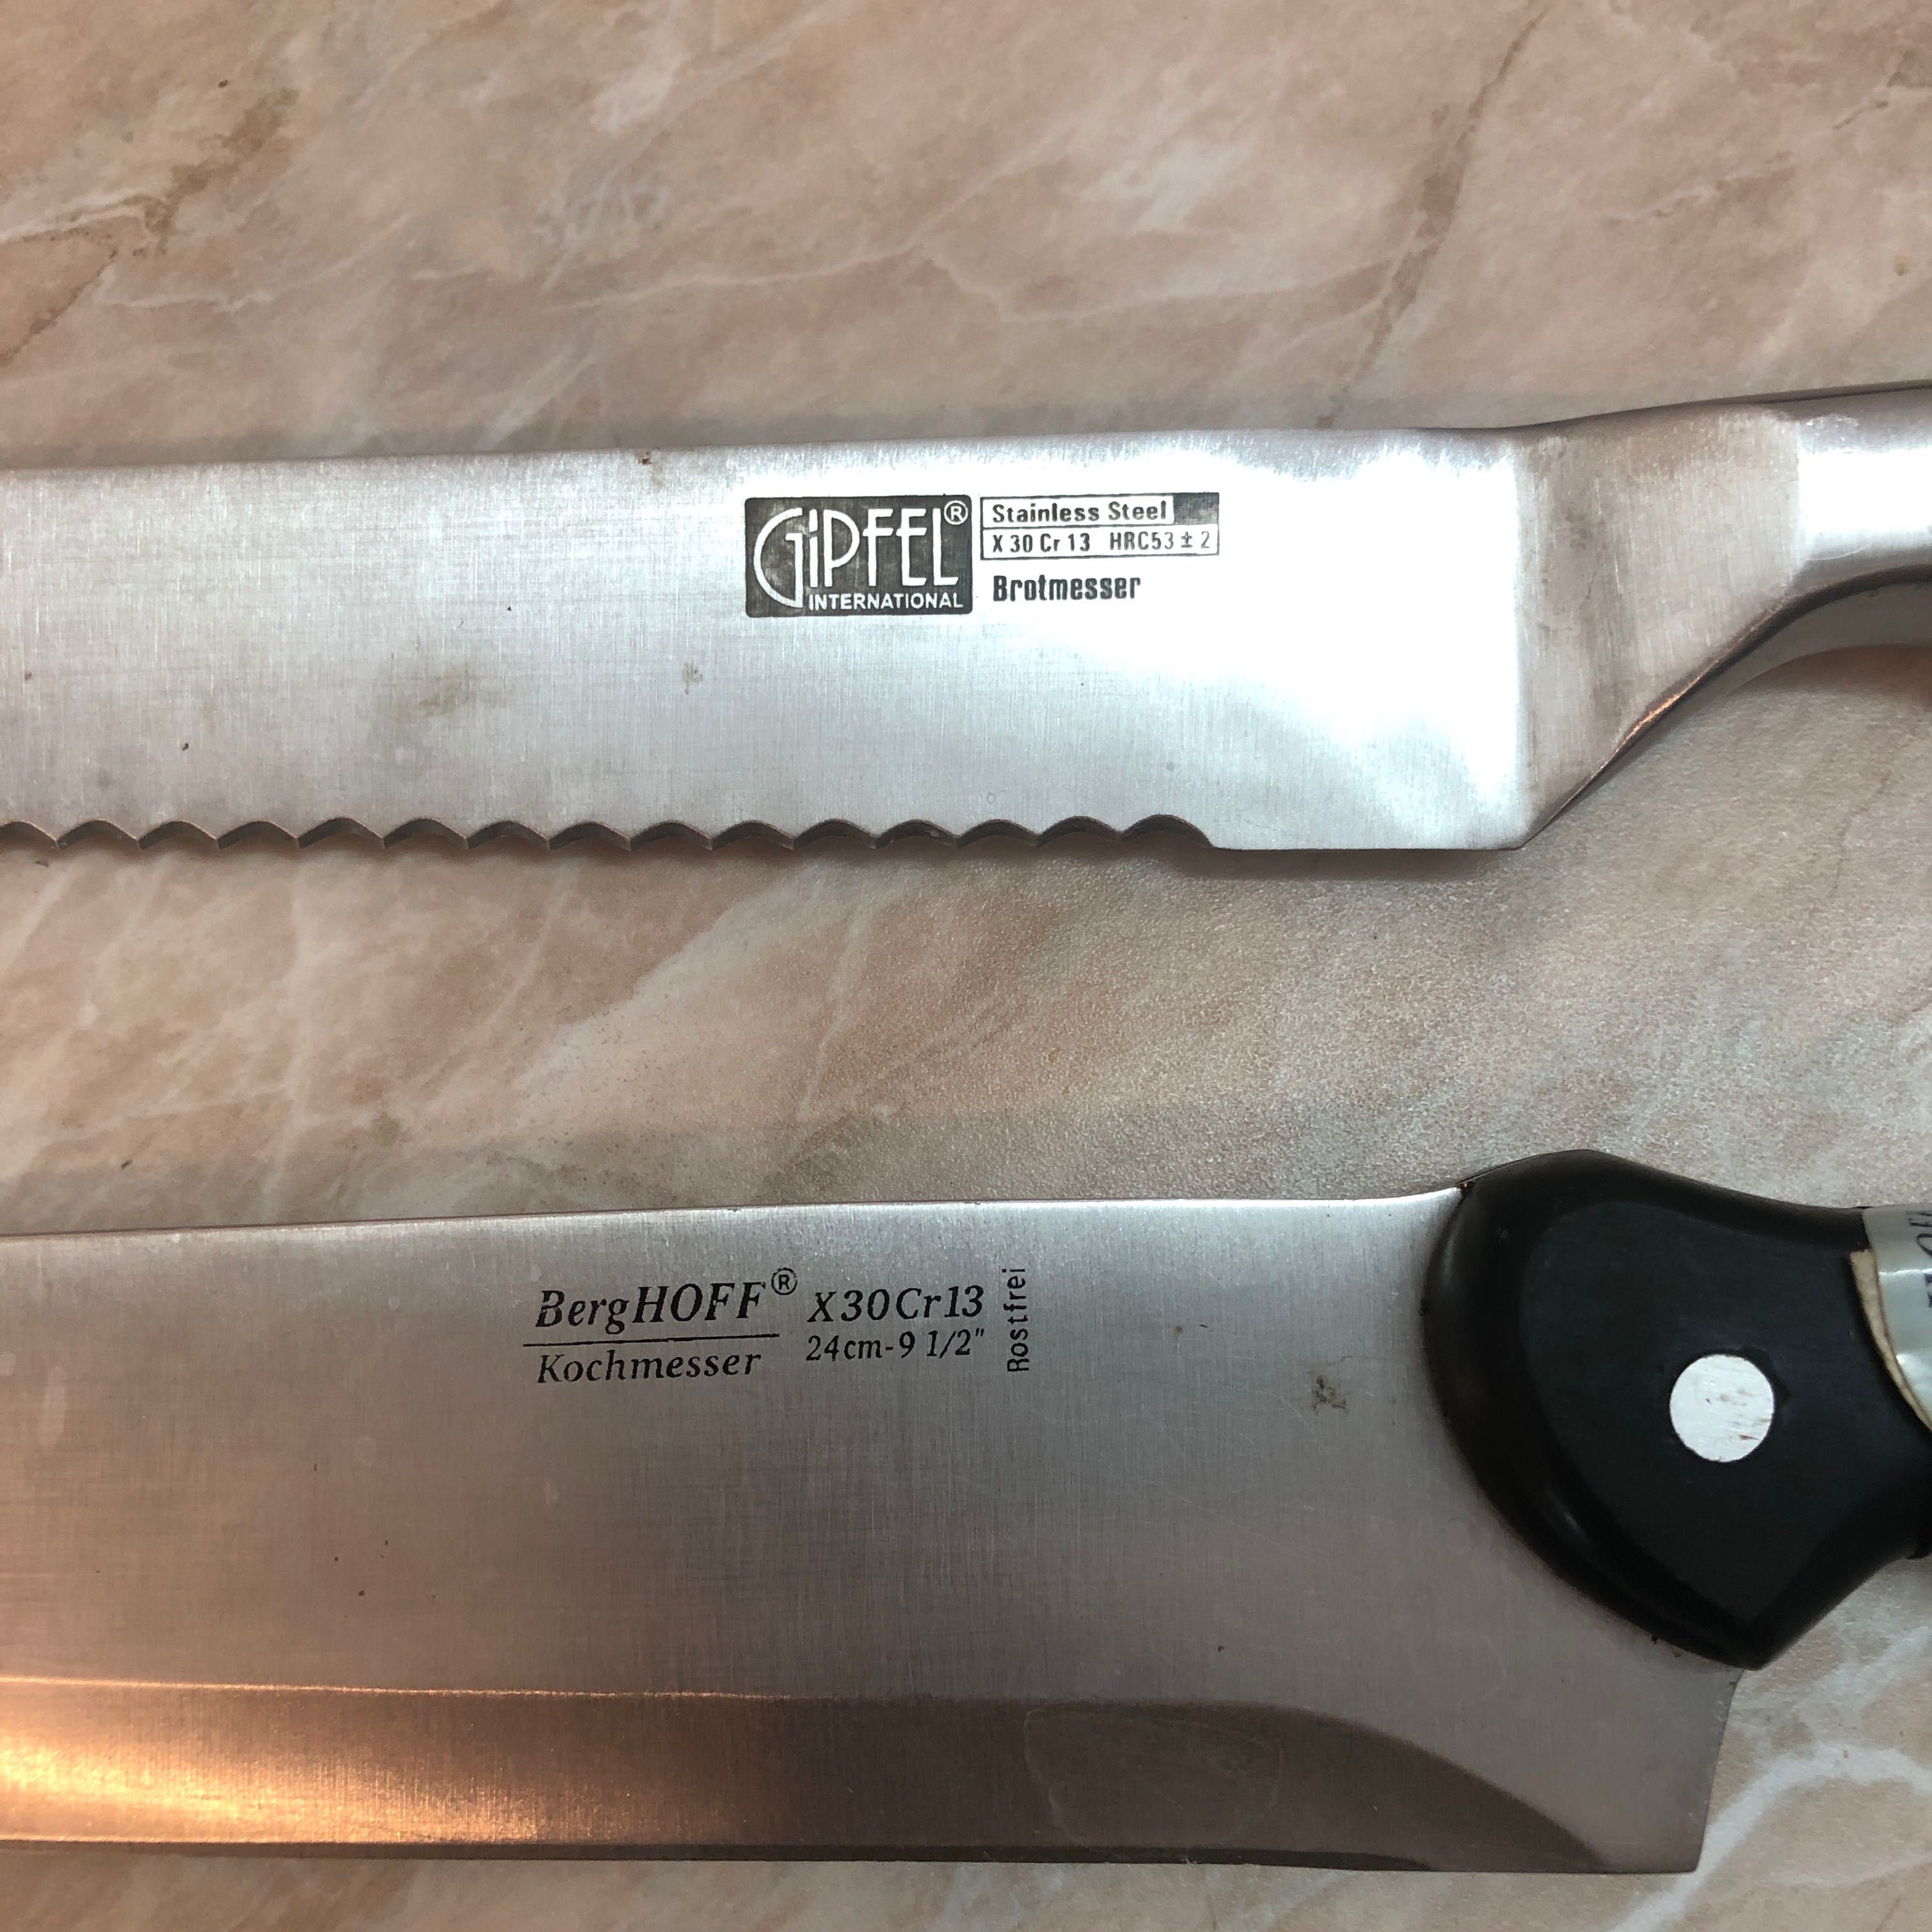 2 ножа BergHOFF x30cr13 и Gipfel за хляб